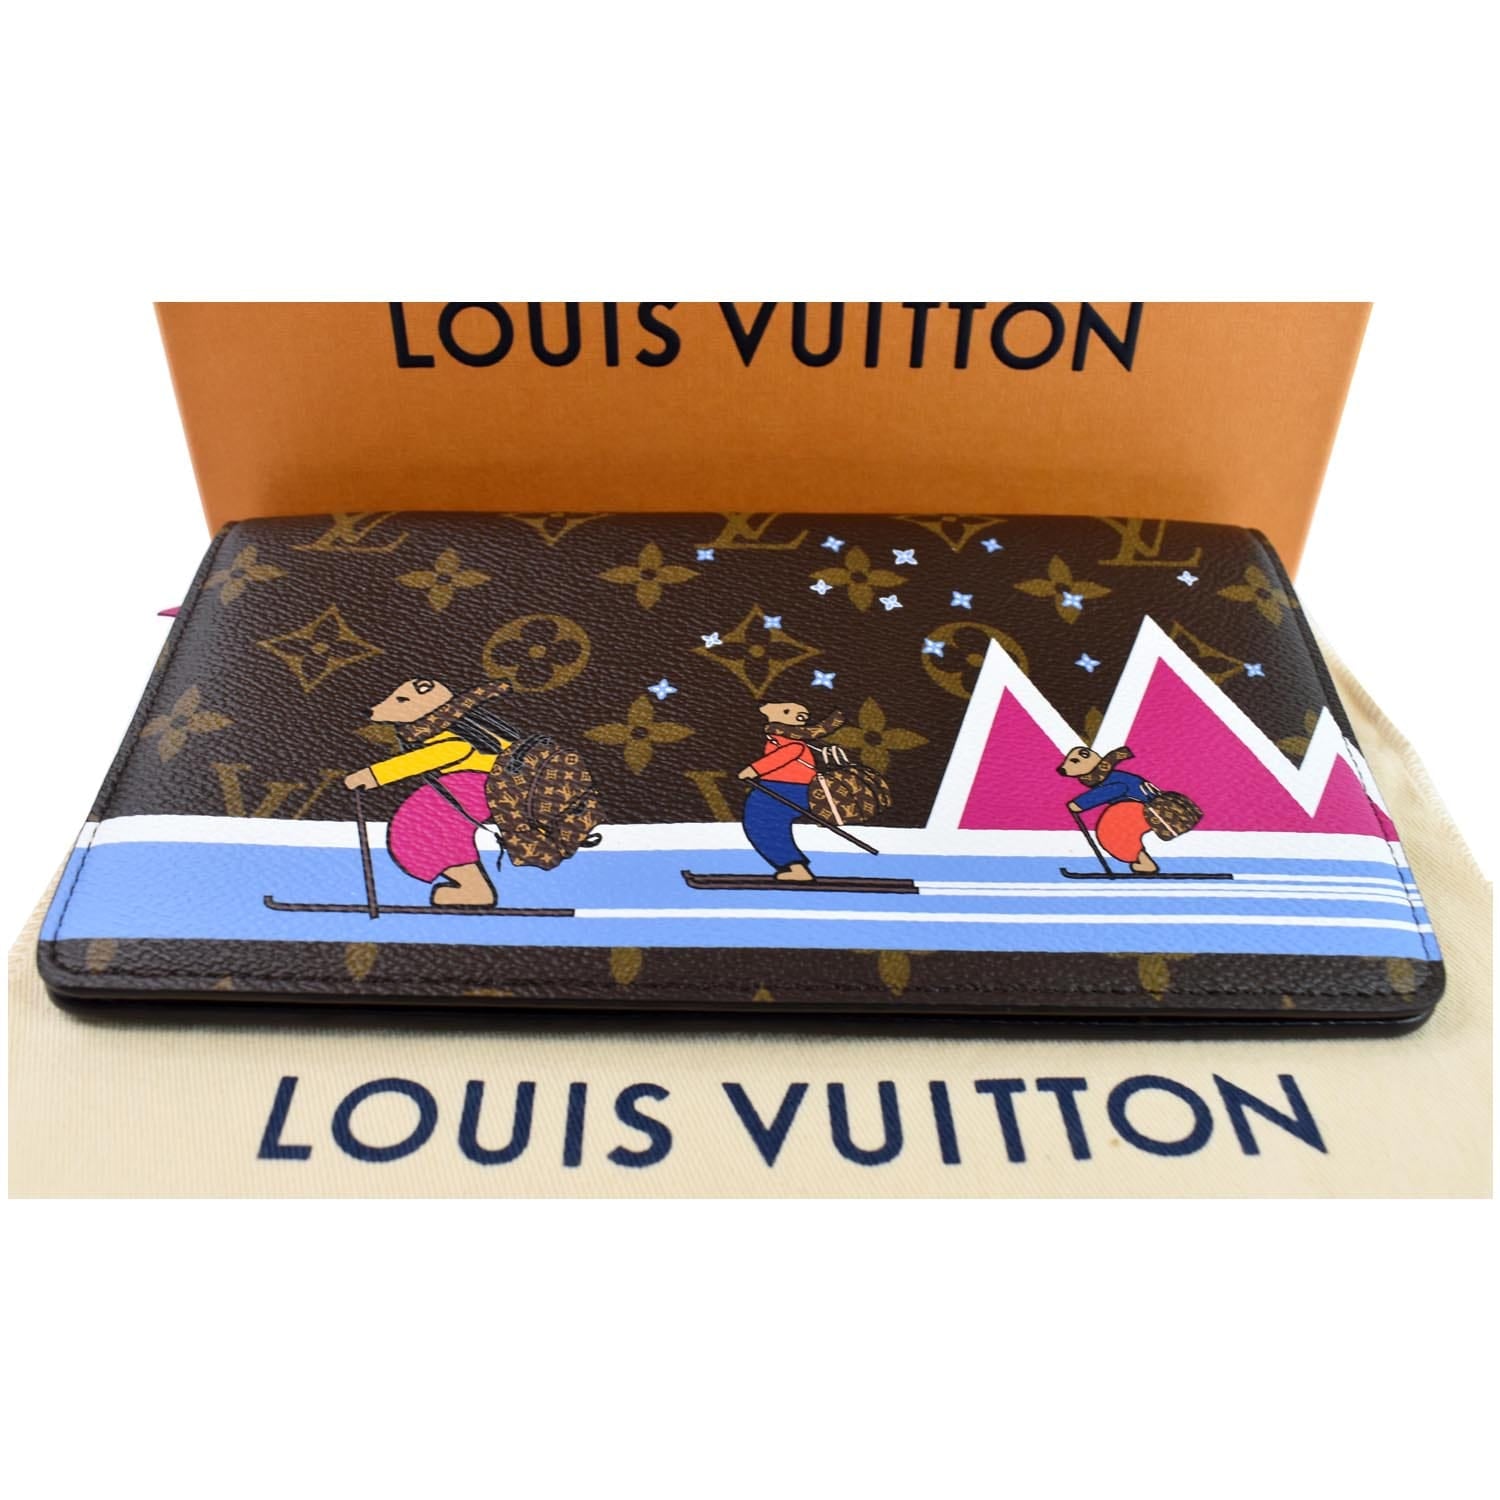 🤎 LOUIS VUITTON 🤎 Monogram Pochette clutch in mint condition